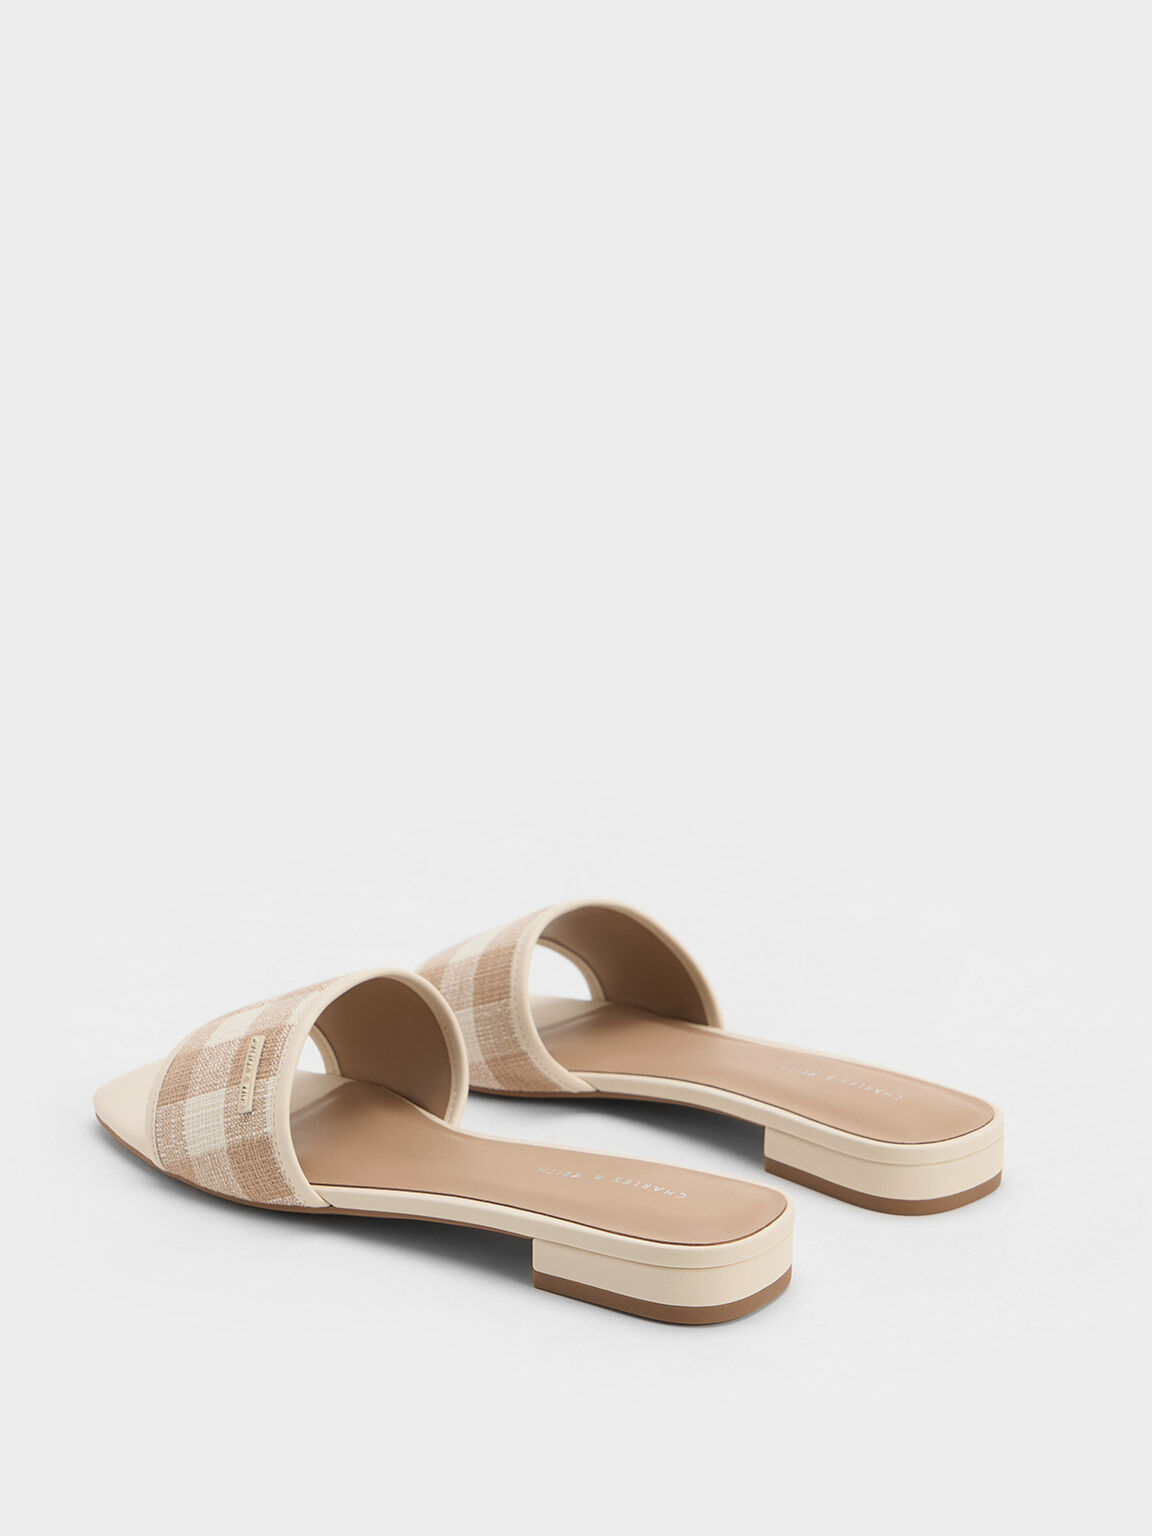 Woven Gingham Flat Sandals, Sand, hi-res